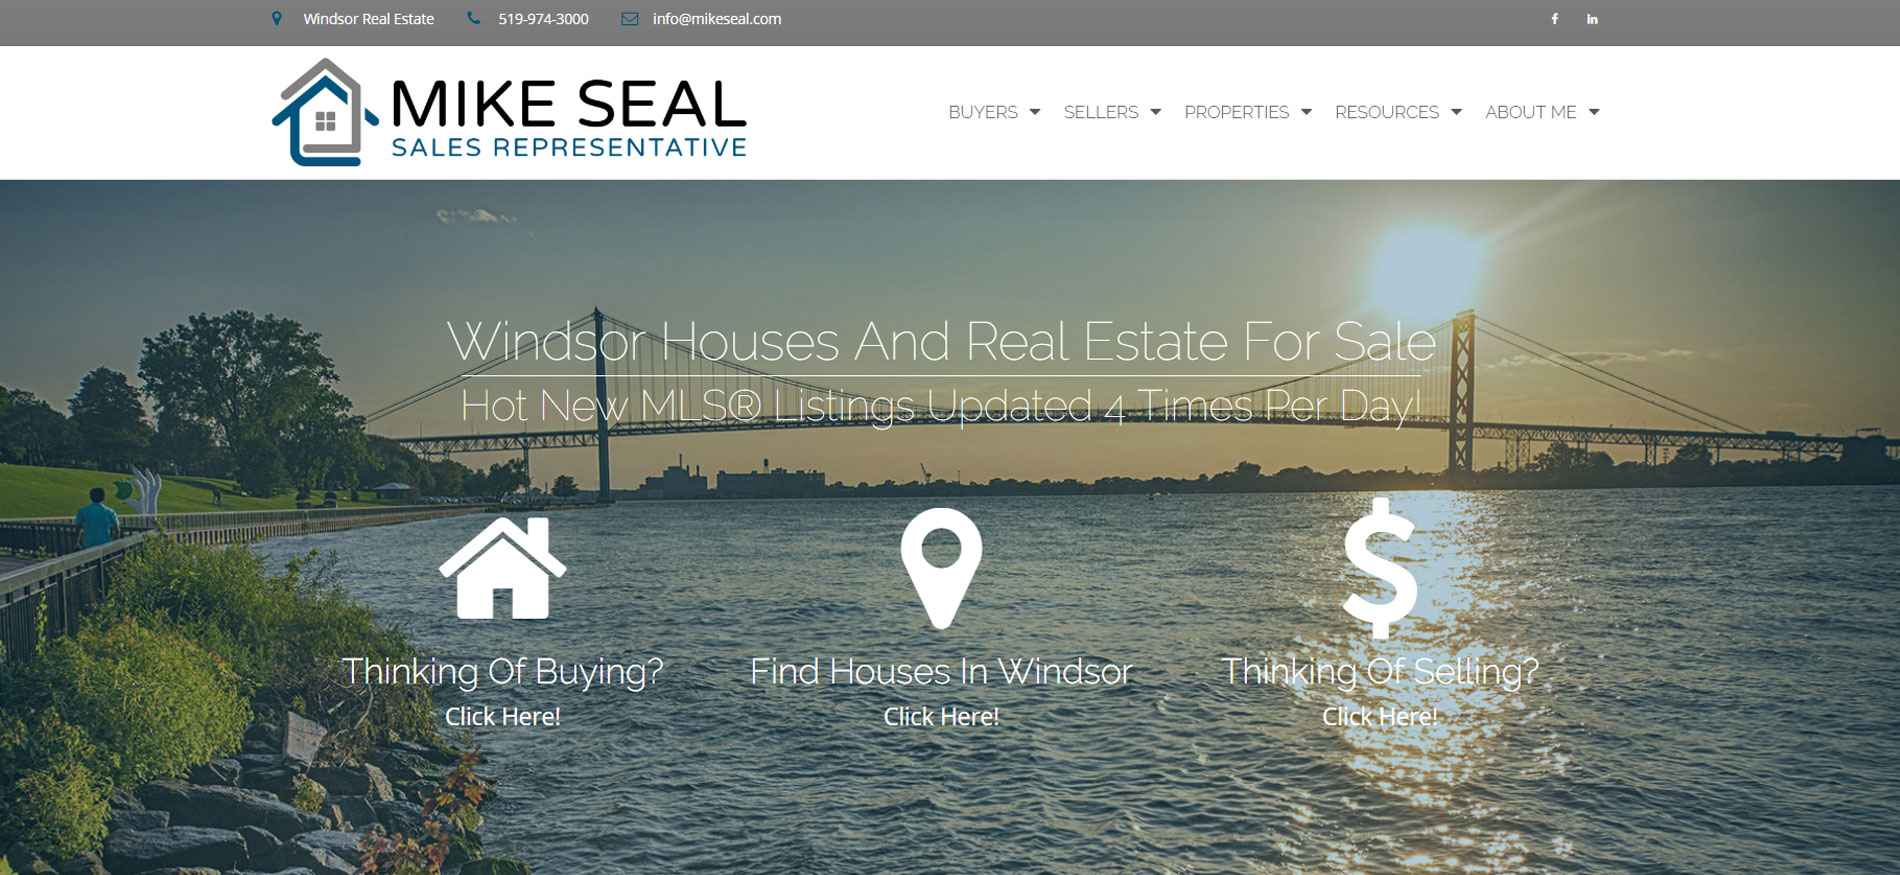 Mike Seal Windsor Real Estate